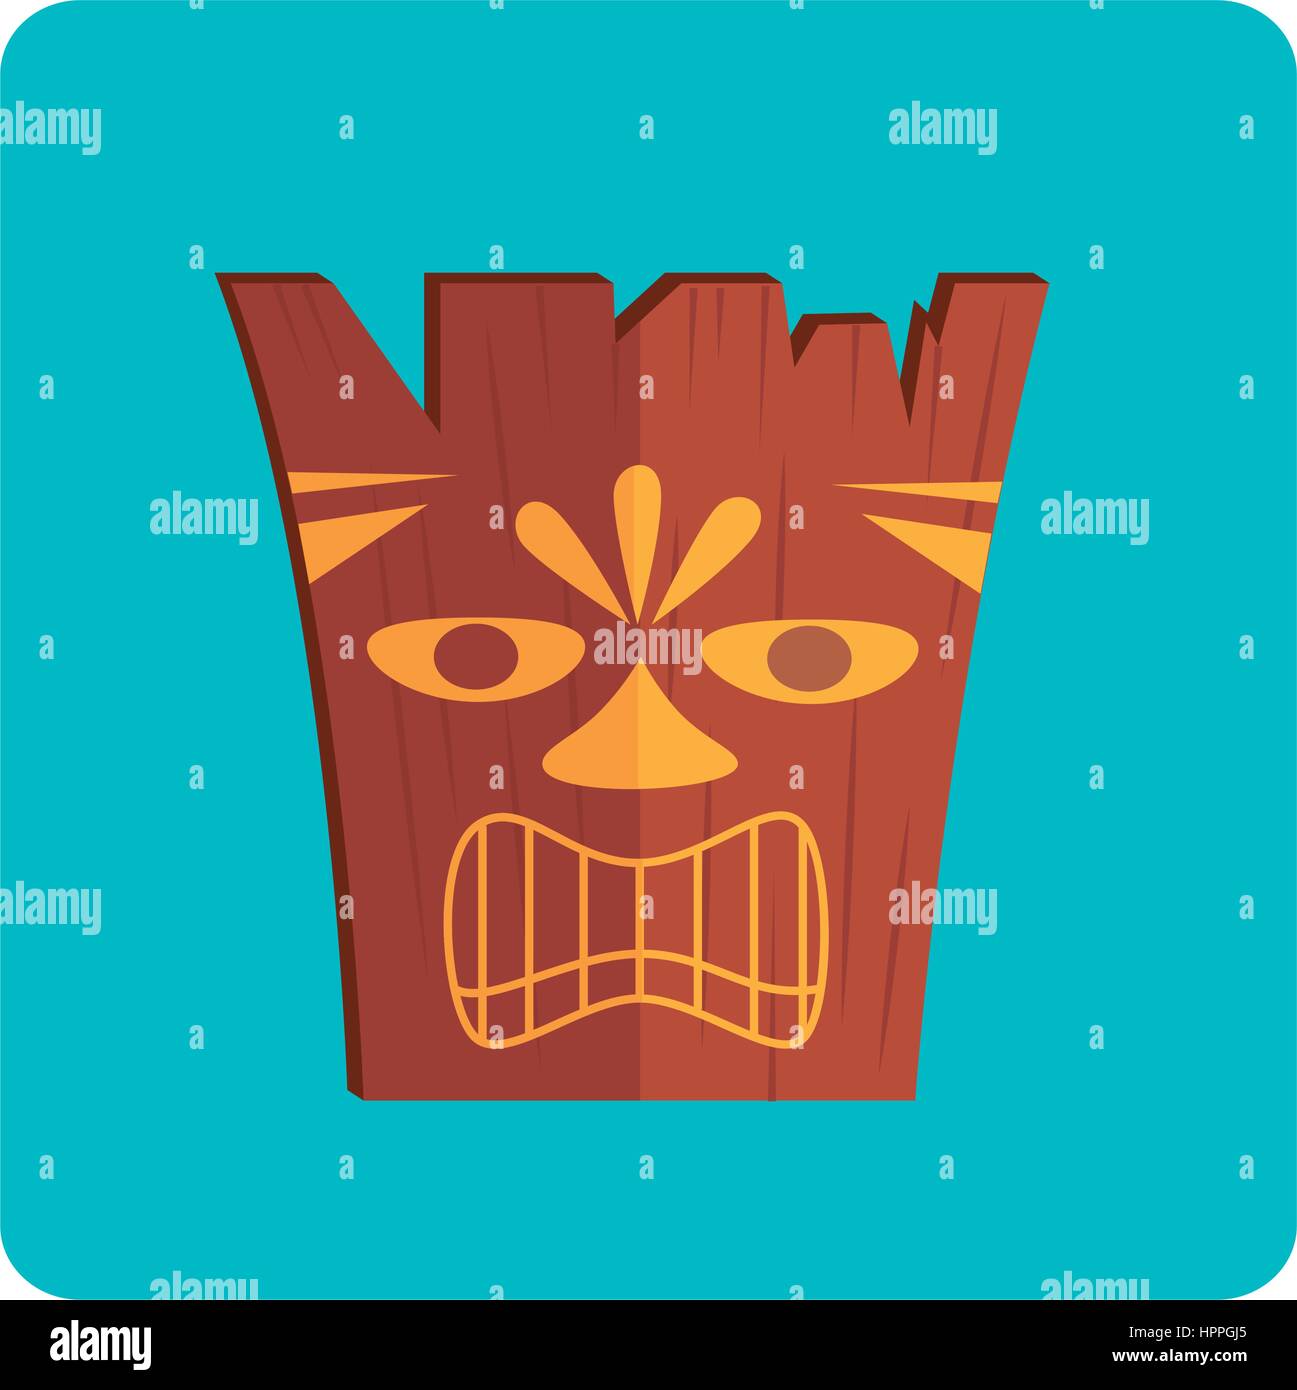 Hawaii-Totem-Kultur-Ikone Stock Vektor